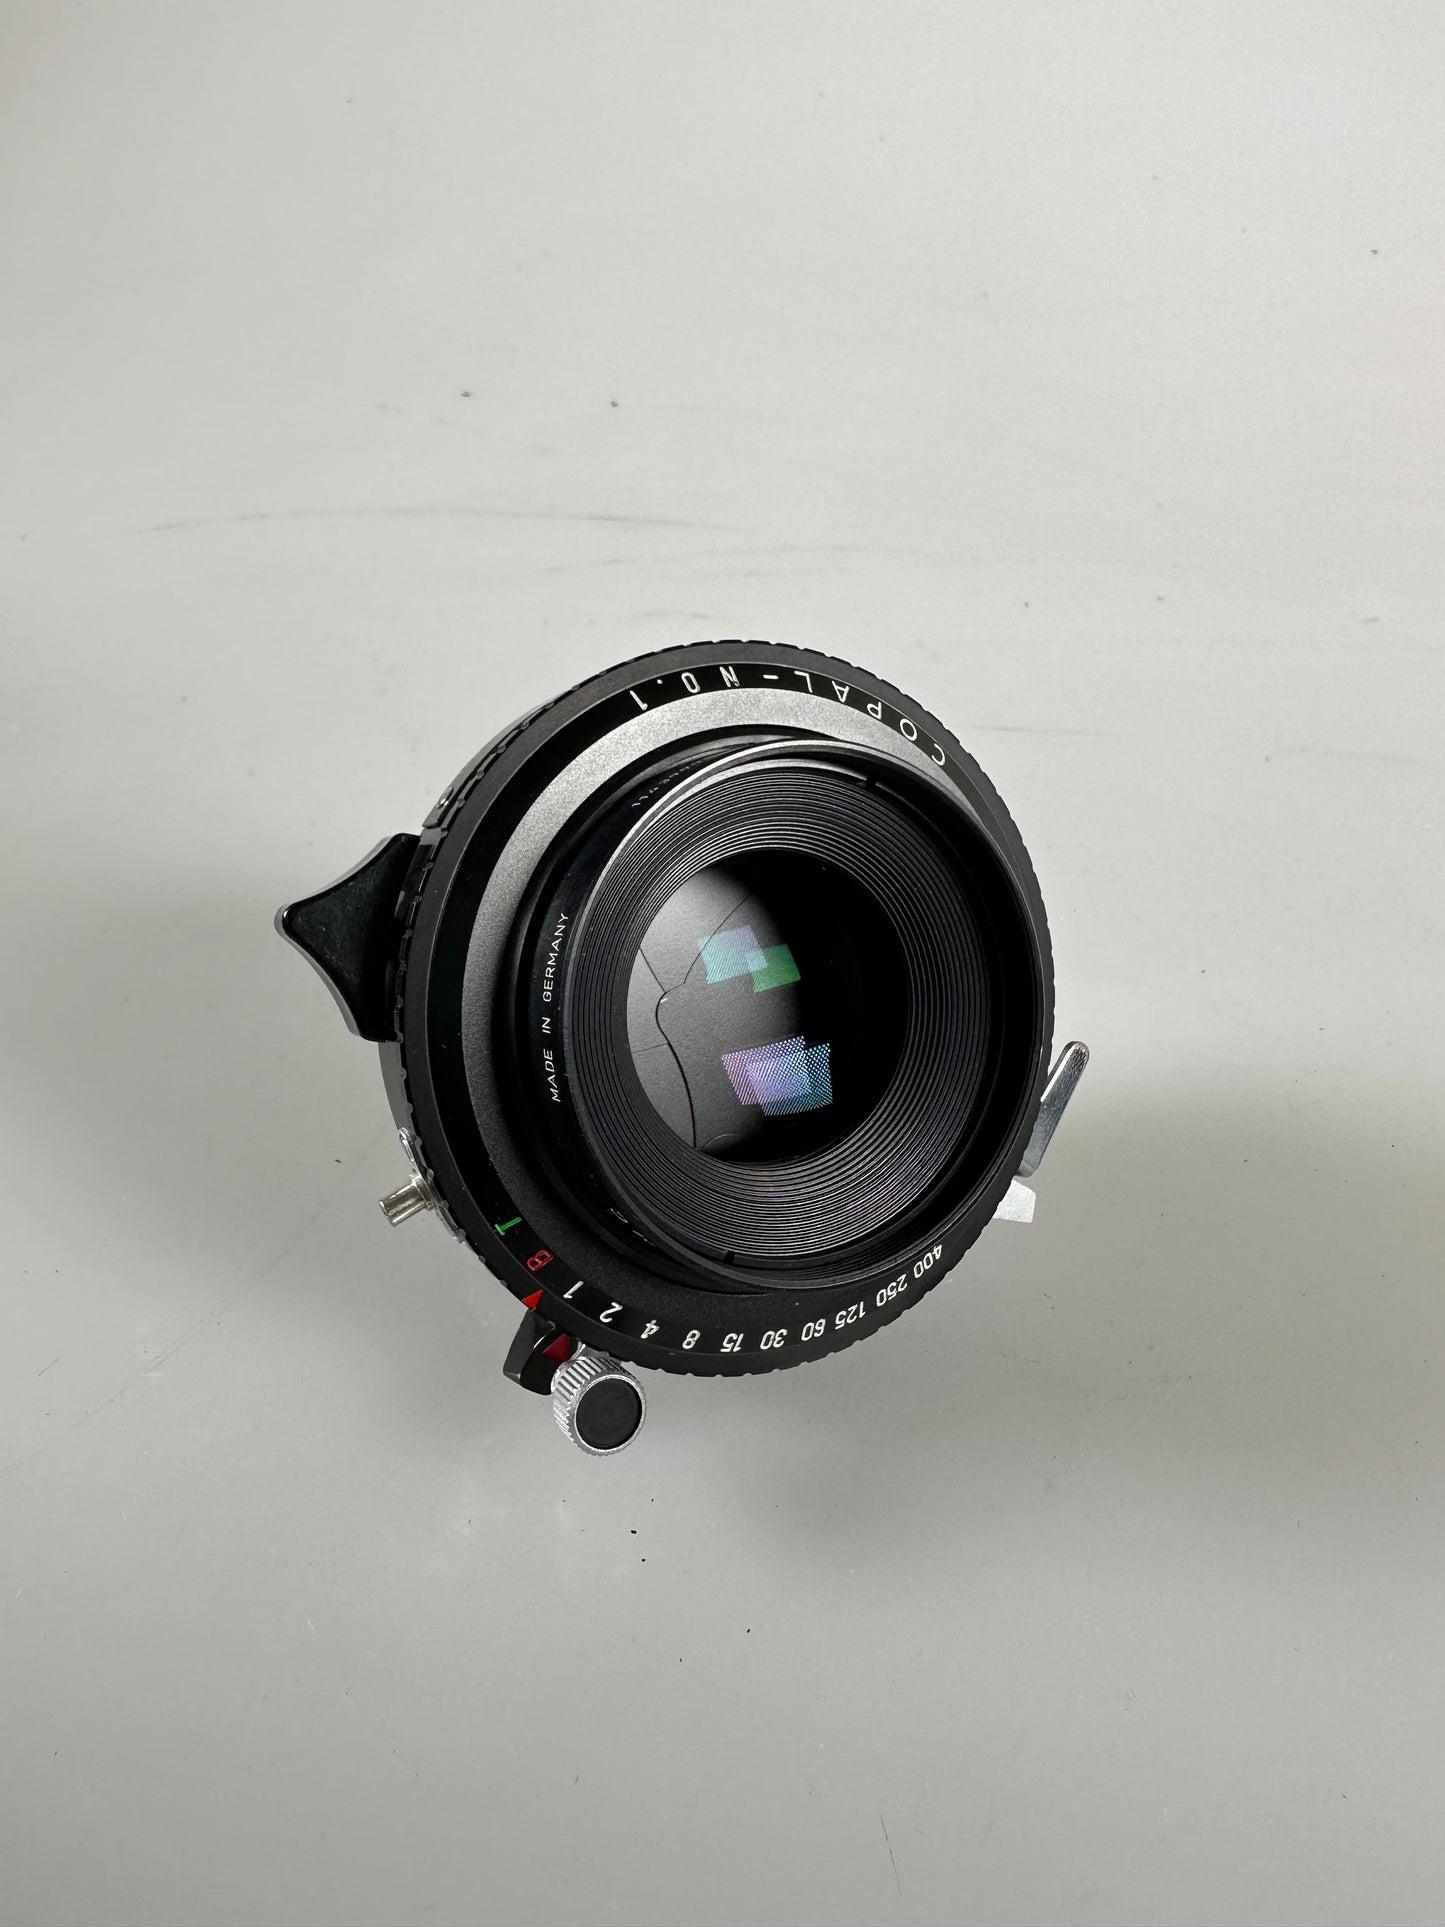 Rodenstock Geronar 210mm f6.8 MC COPAL 1 Large Format Lens